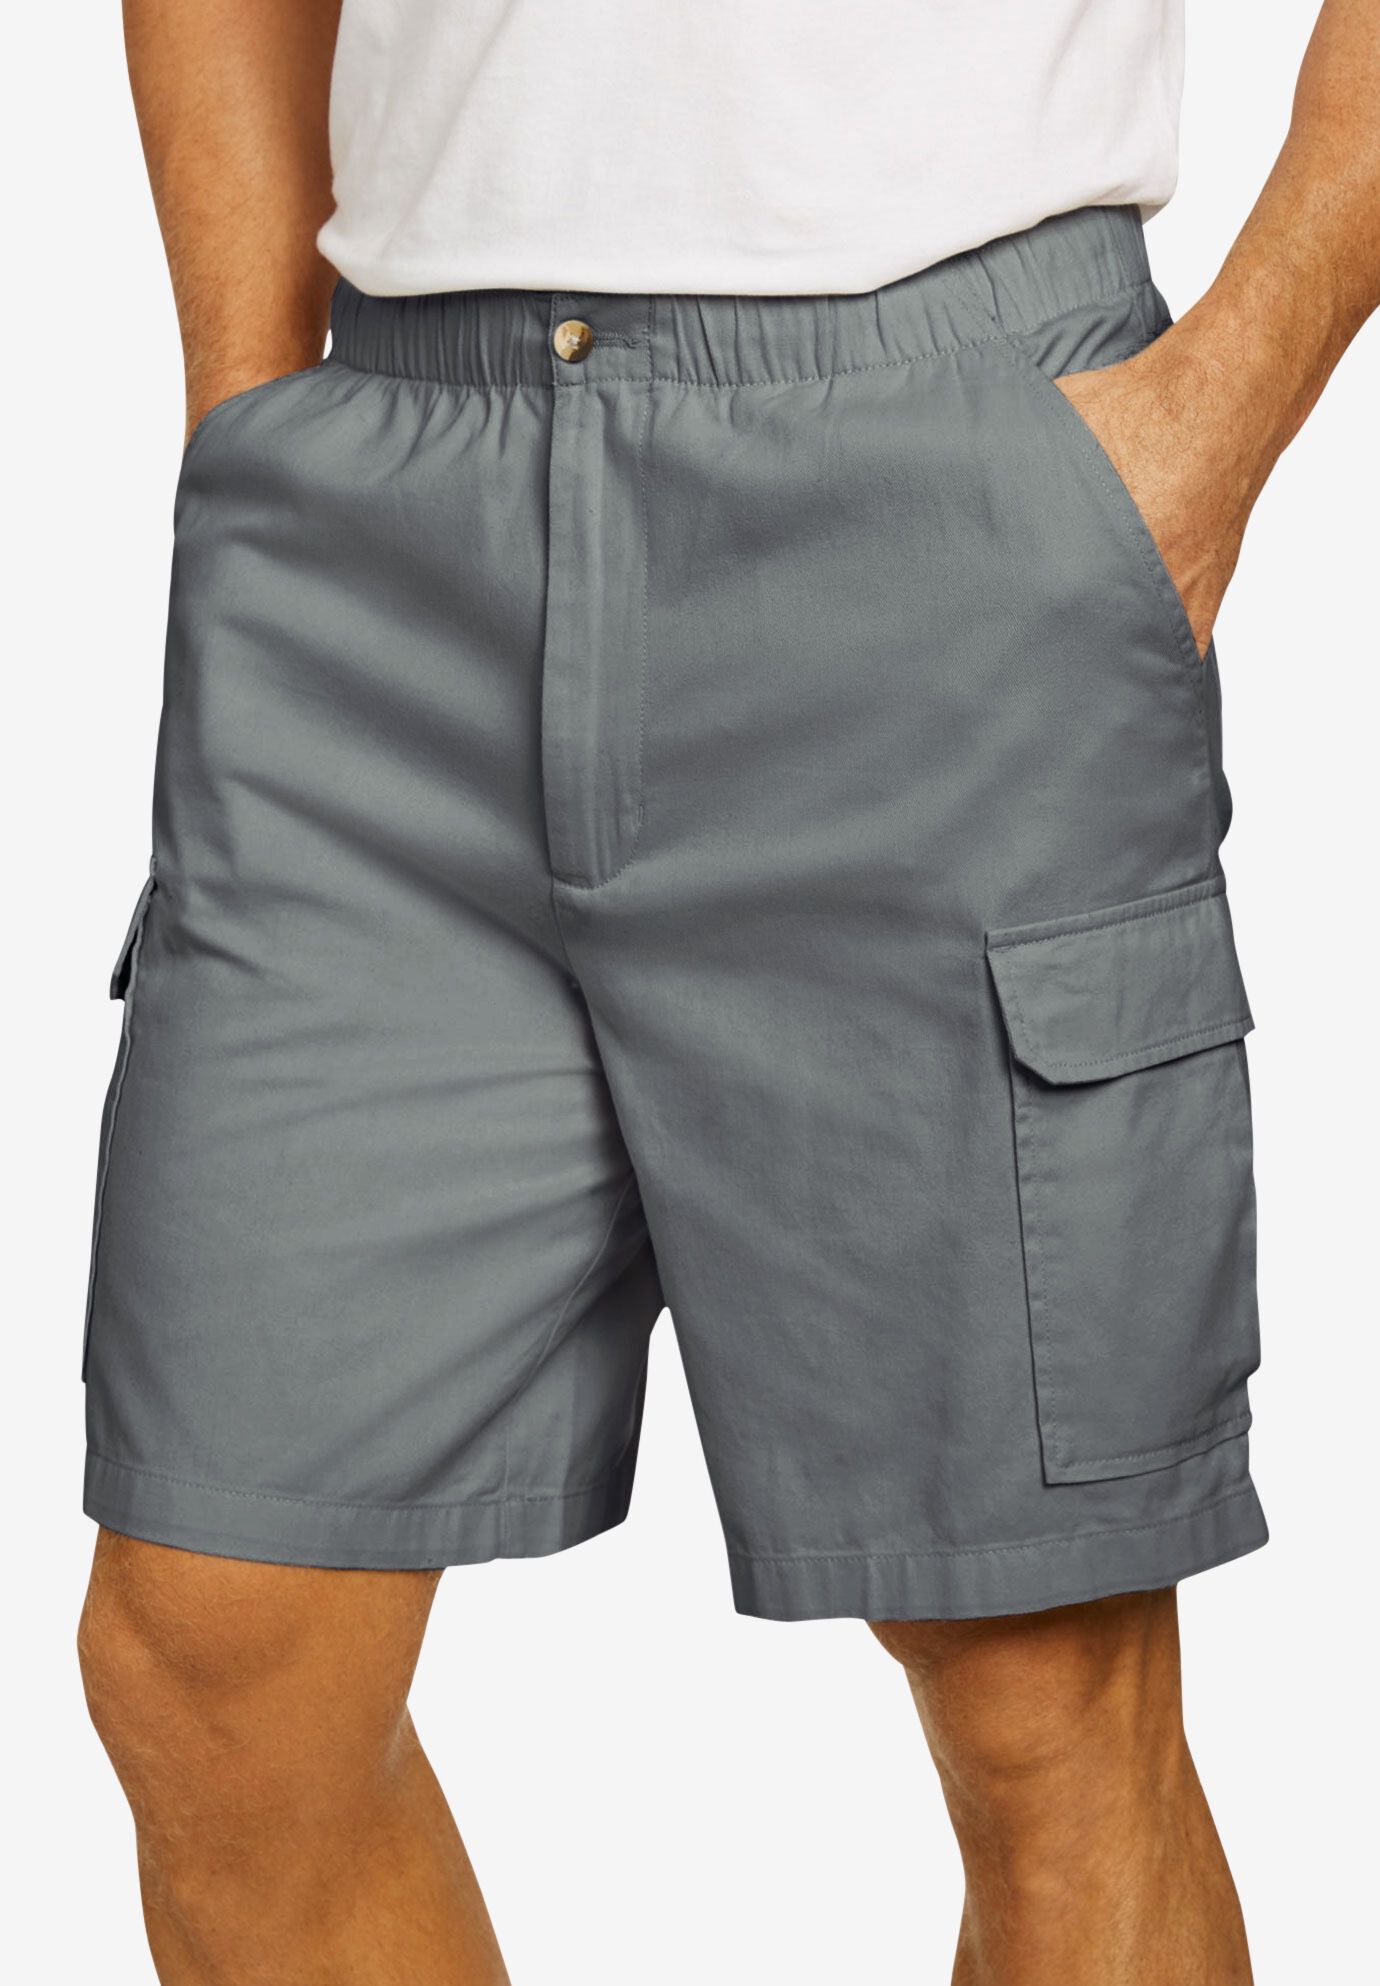 Knockarounds® Full-Elastic Waist Cargo Pants